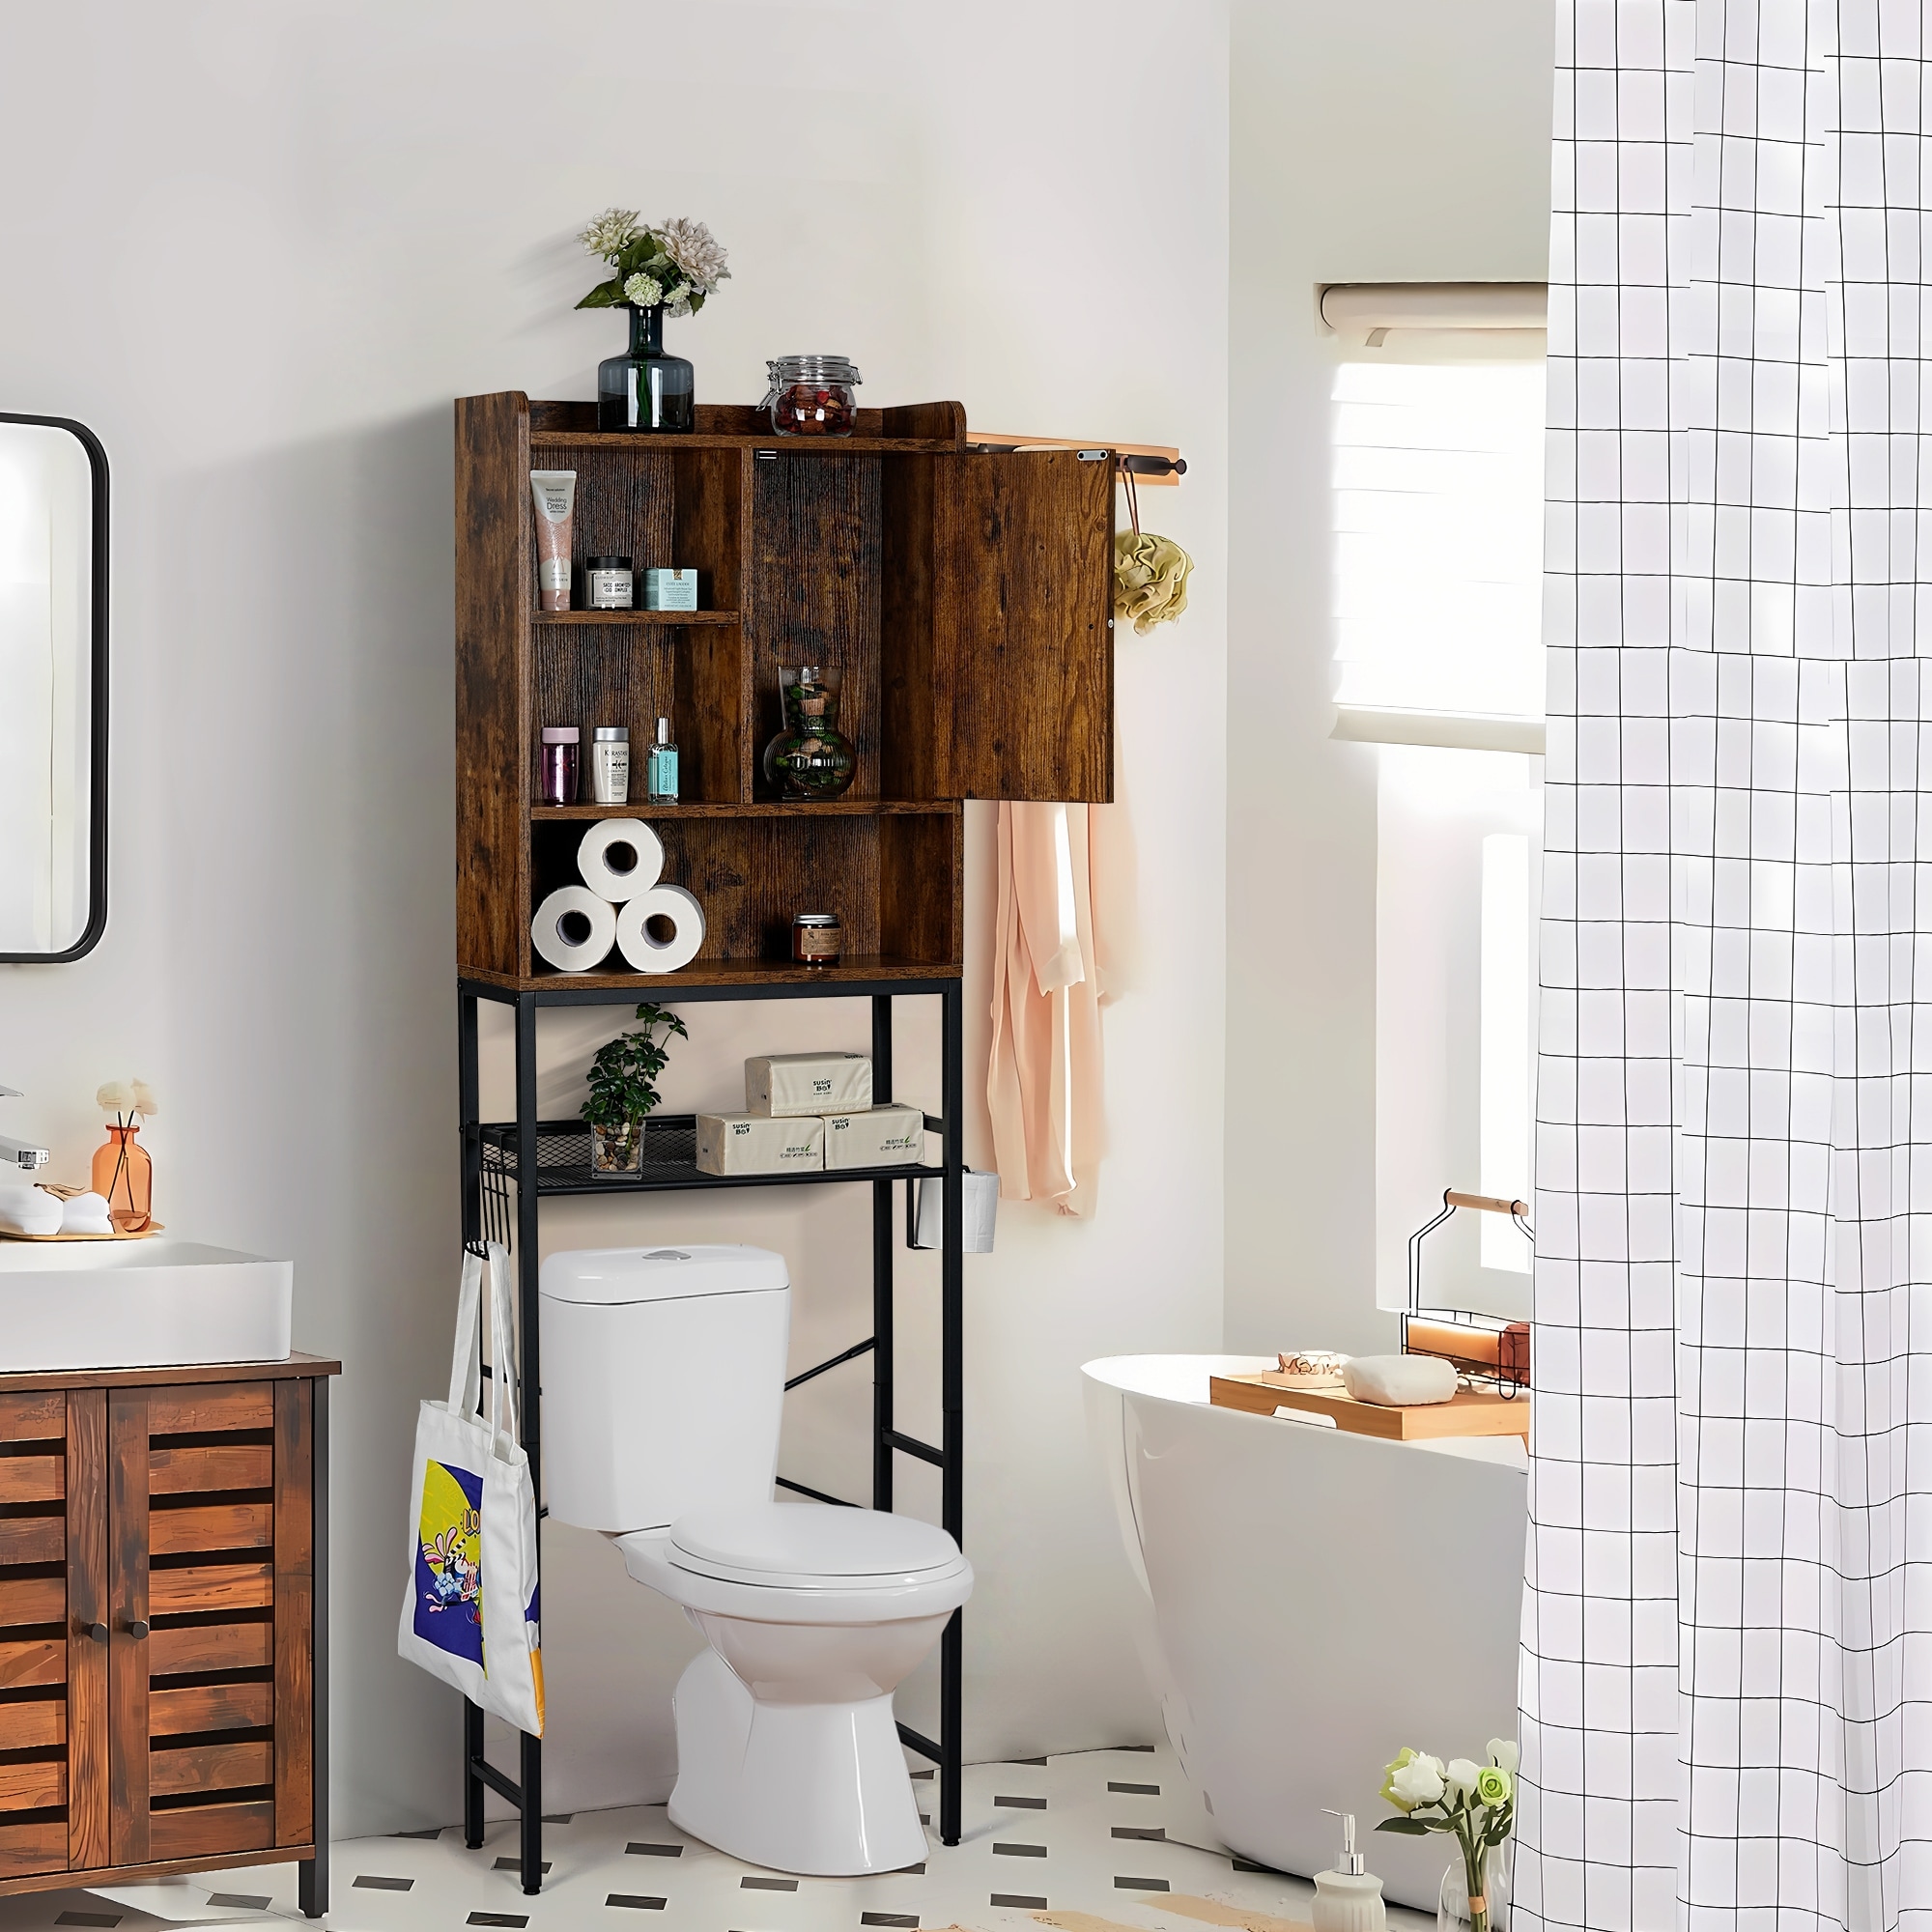 https://ak1.ostkcdn.com/images/products/is/images/direct/b1ef5d3327d2ef559ba3b62c35b335e25fda3e74/Over-The-Toilet-Storage-Bathroom-Spacesaver%2C-Freestanding-Bathroom-Shelf-Organizer-Toilet-Rack-%28Vintage-Style%29.jpg